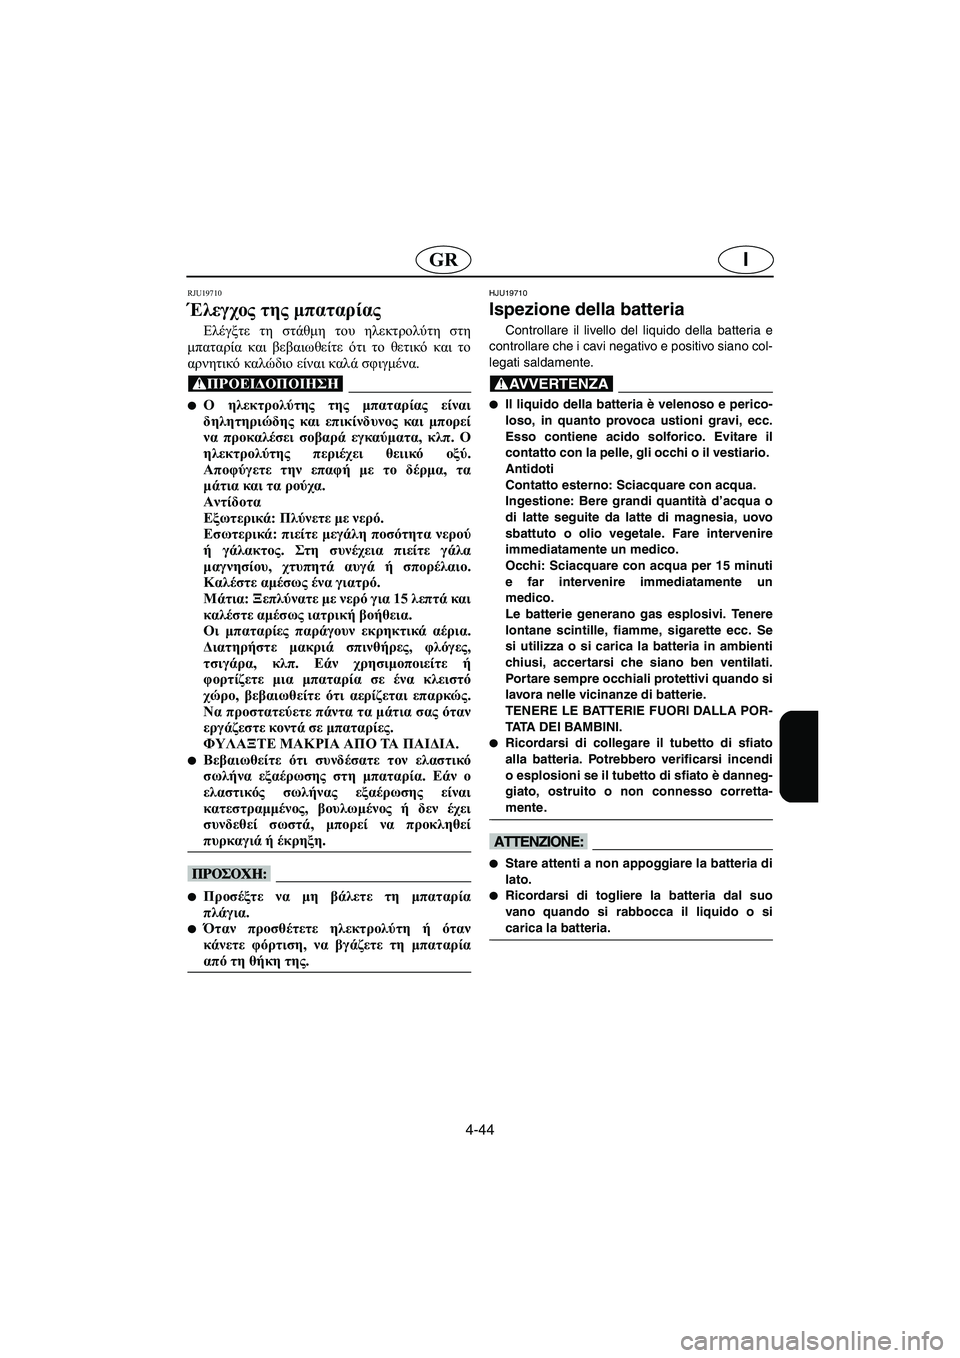 YAMAHA FX HO 2006  Manuale duso (in Italian) 4-44
IGR
RJU19710 
Έλεγχος της μπαταρίας 
Ελέγξτε τη στάθμη του ηλεκτρολύτη στη
μπαταρία και βεβαιωθείτε ότι το θετικ